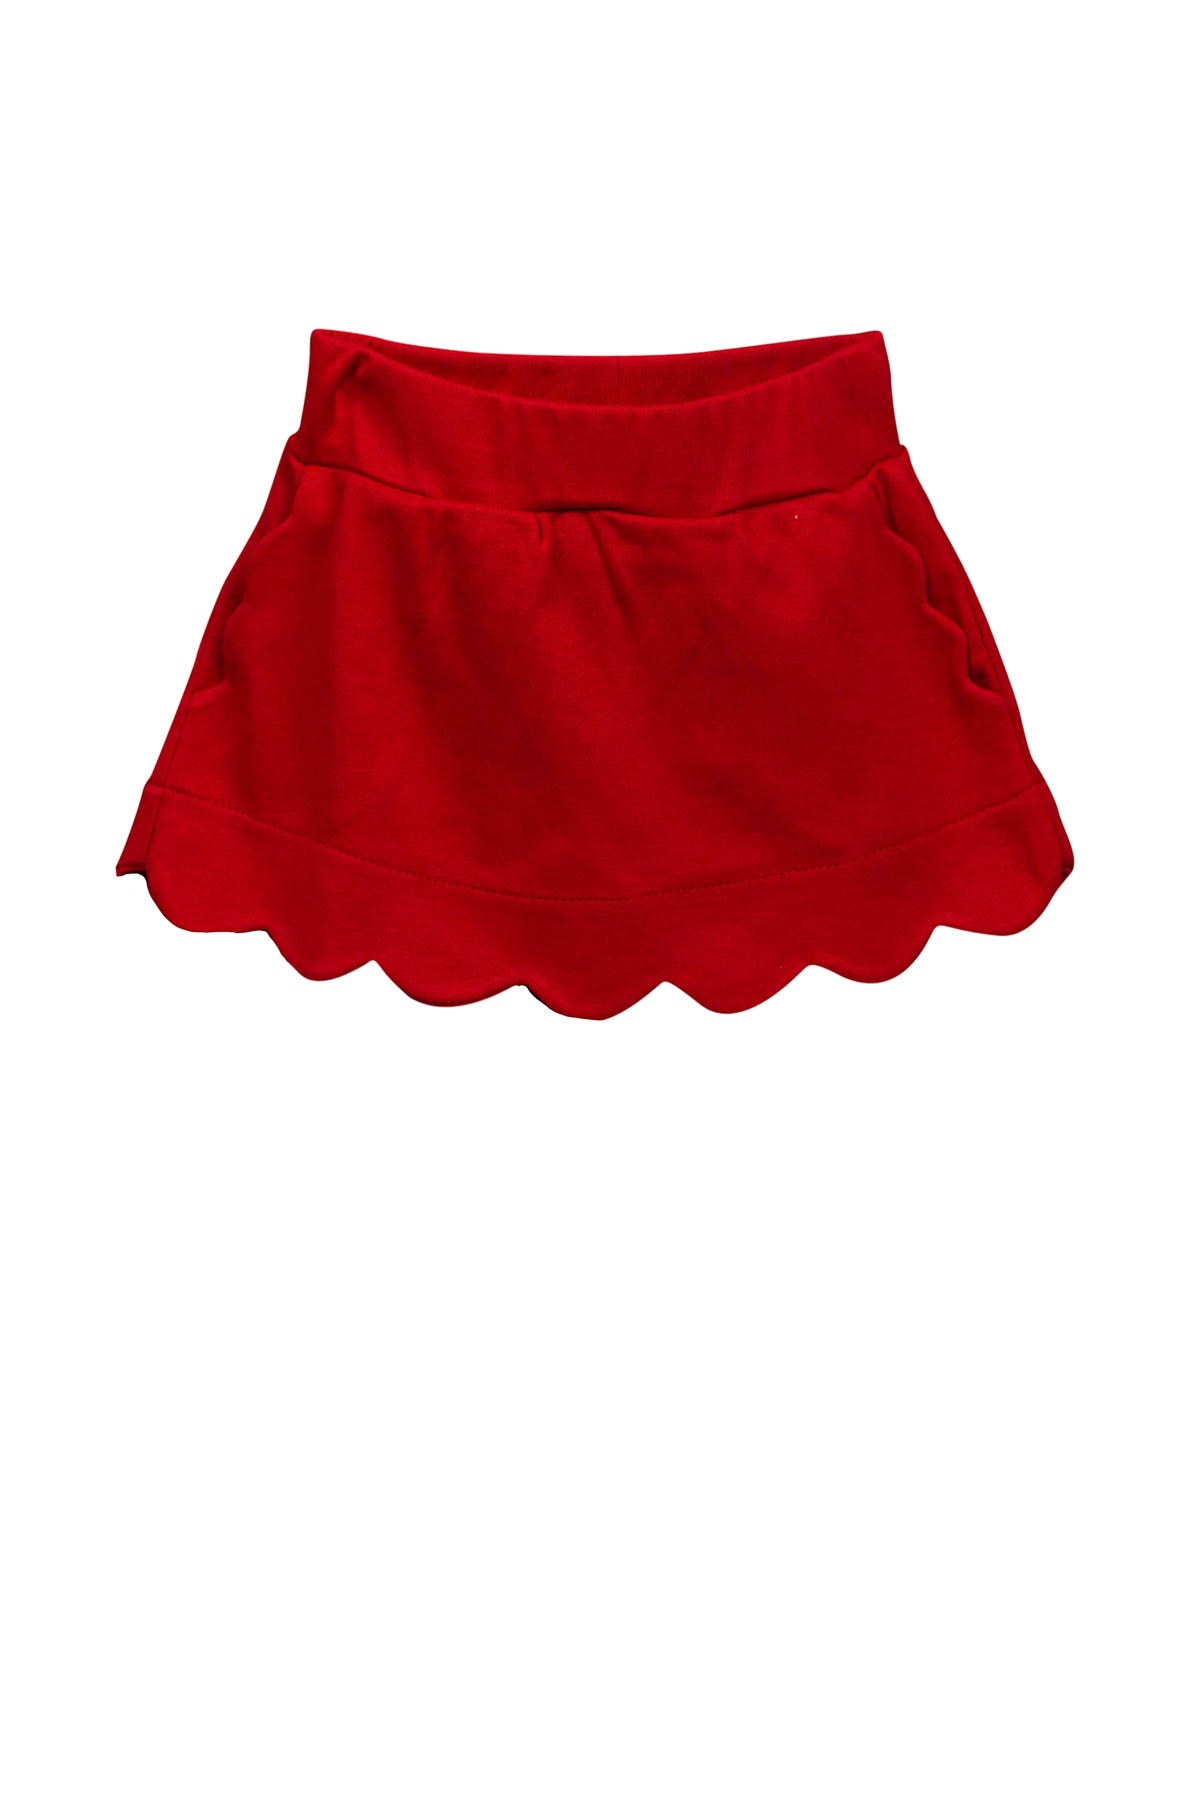 Red Scalloped Skirt - Breckenridge Baby